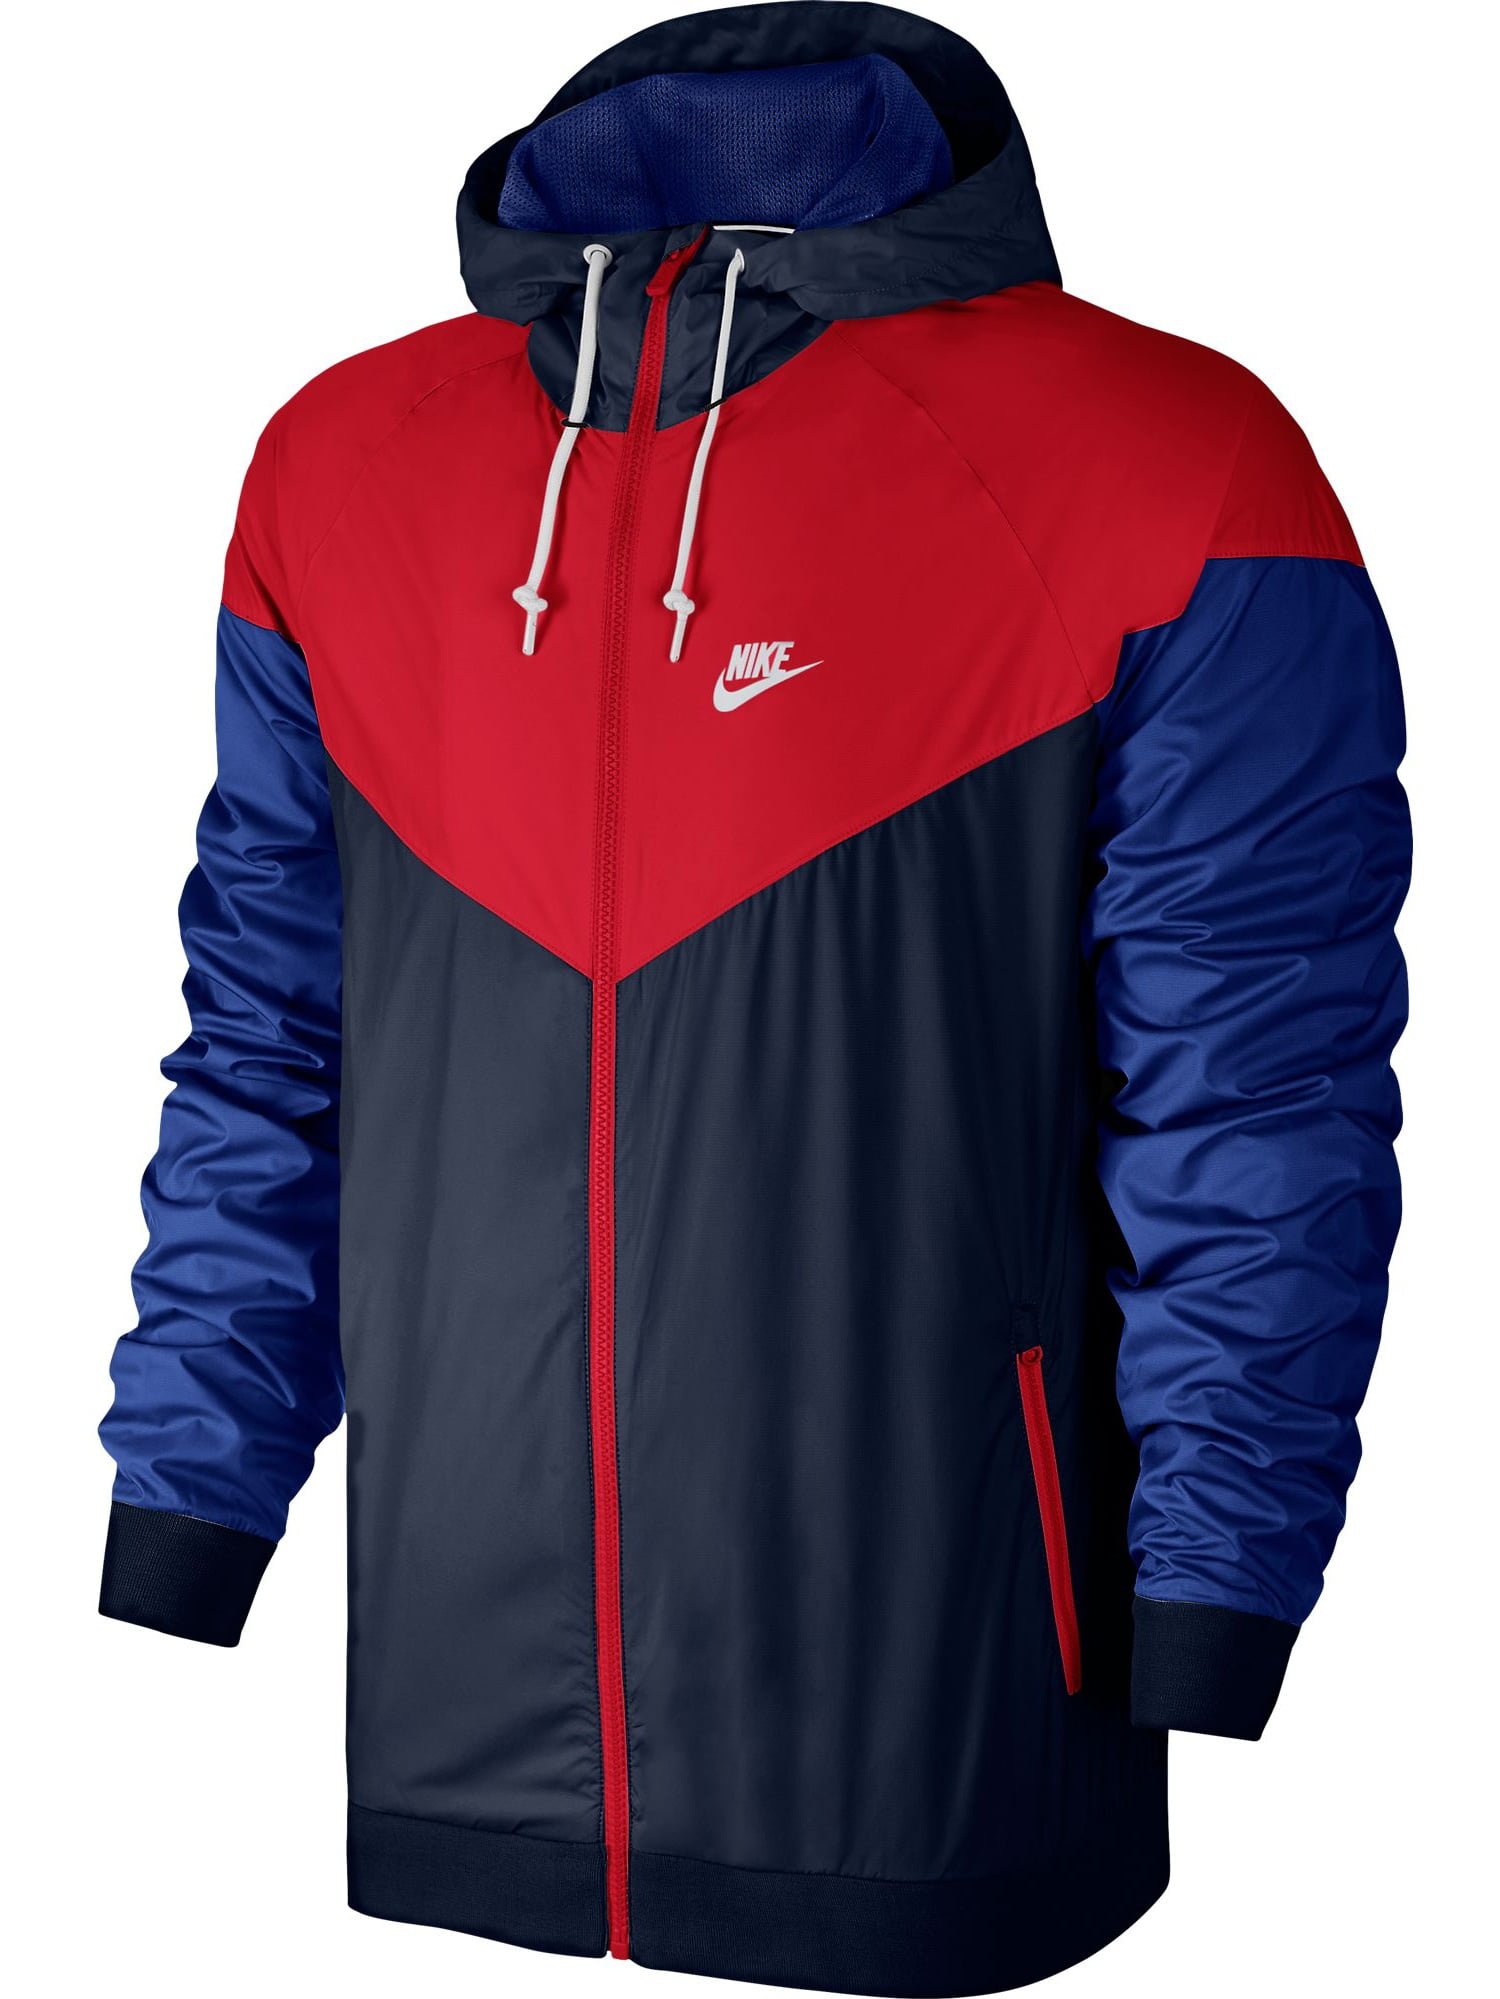 Ópera ensayo adolescente Nike Sportswear Windrunner Men's Jacket Obsidian Blue/University Red/White  727324-452 - Walmart.com